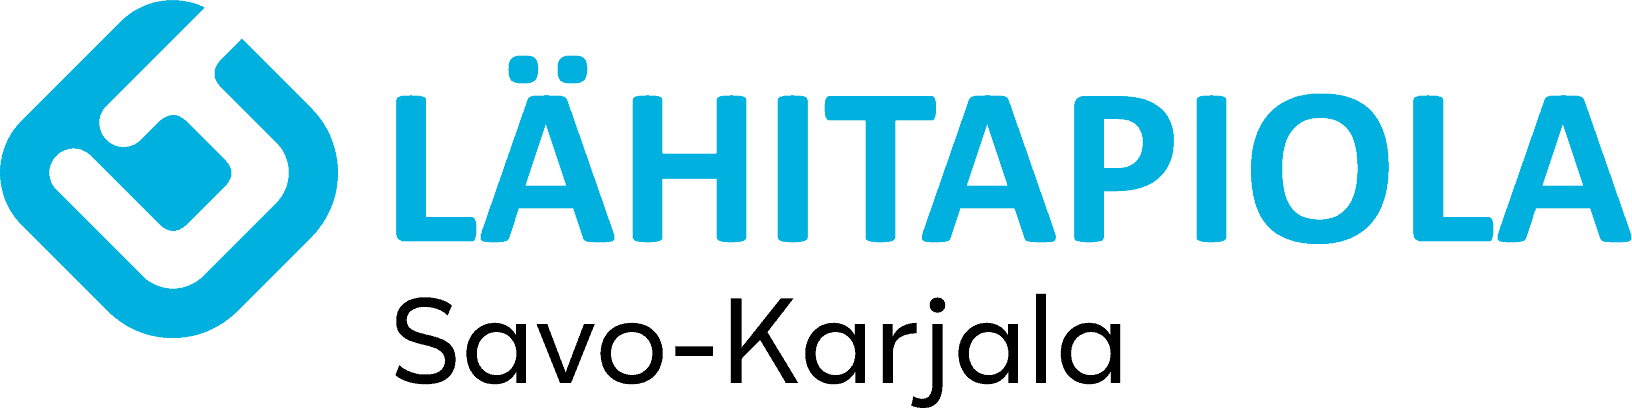 Lahitapiola_SAVO-KARJALA_RGB_sininen_org